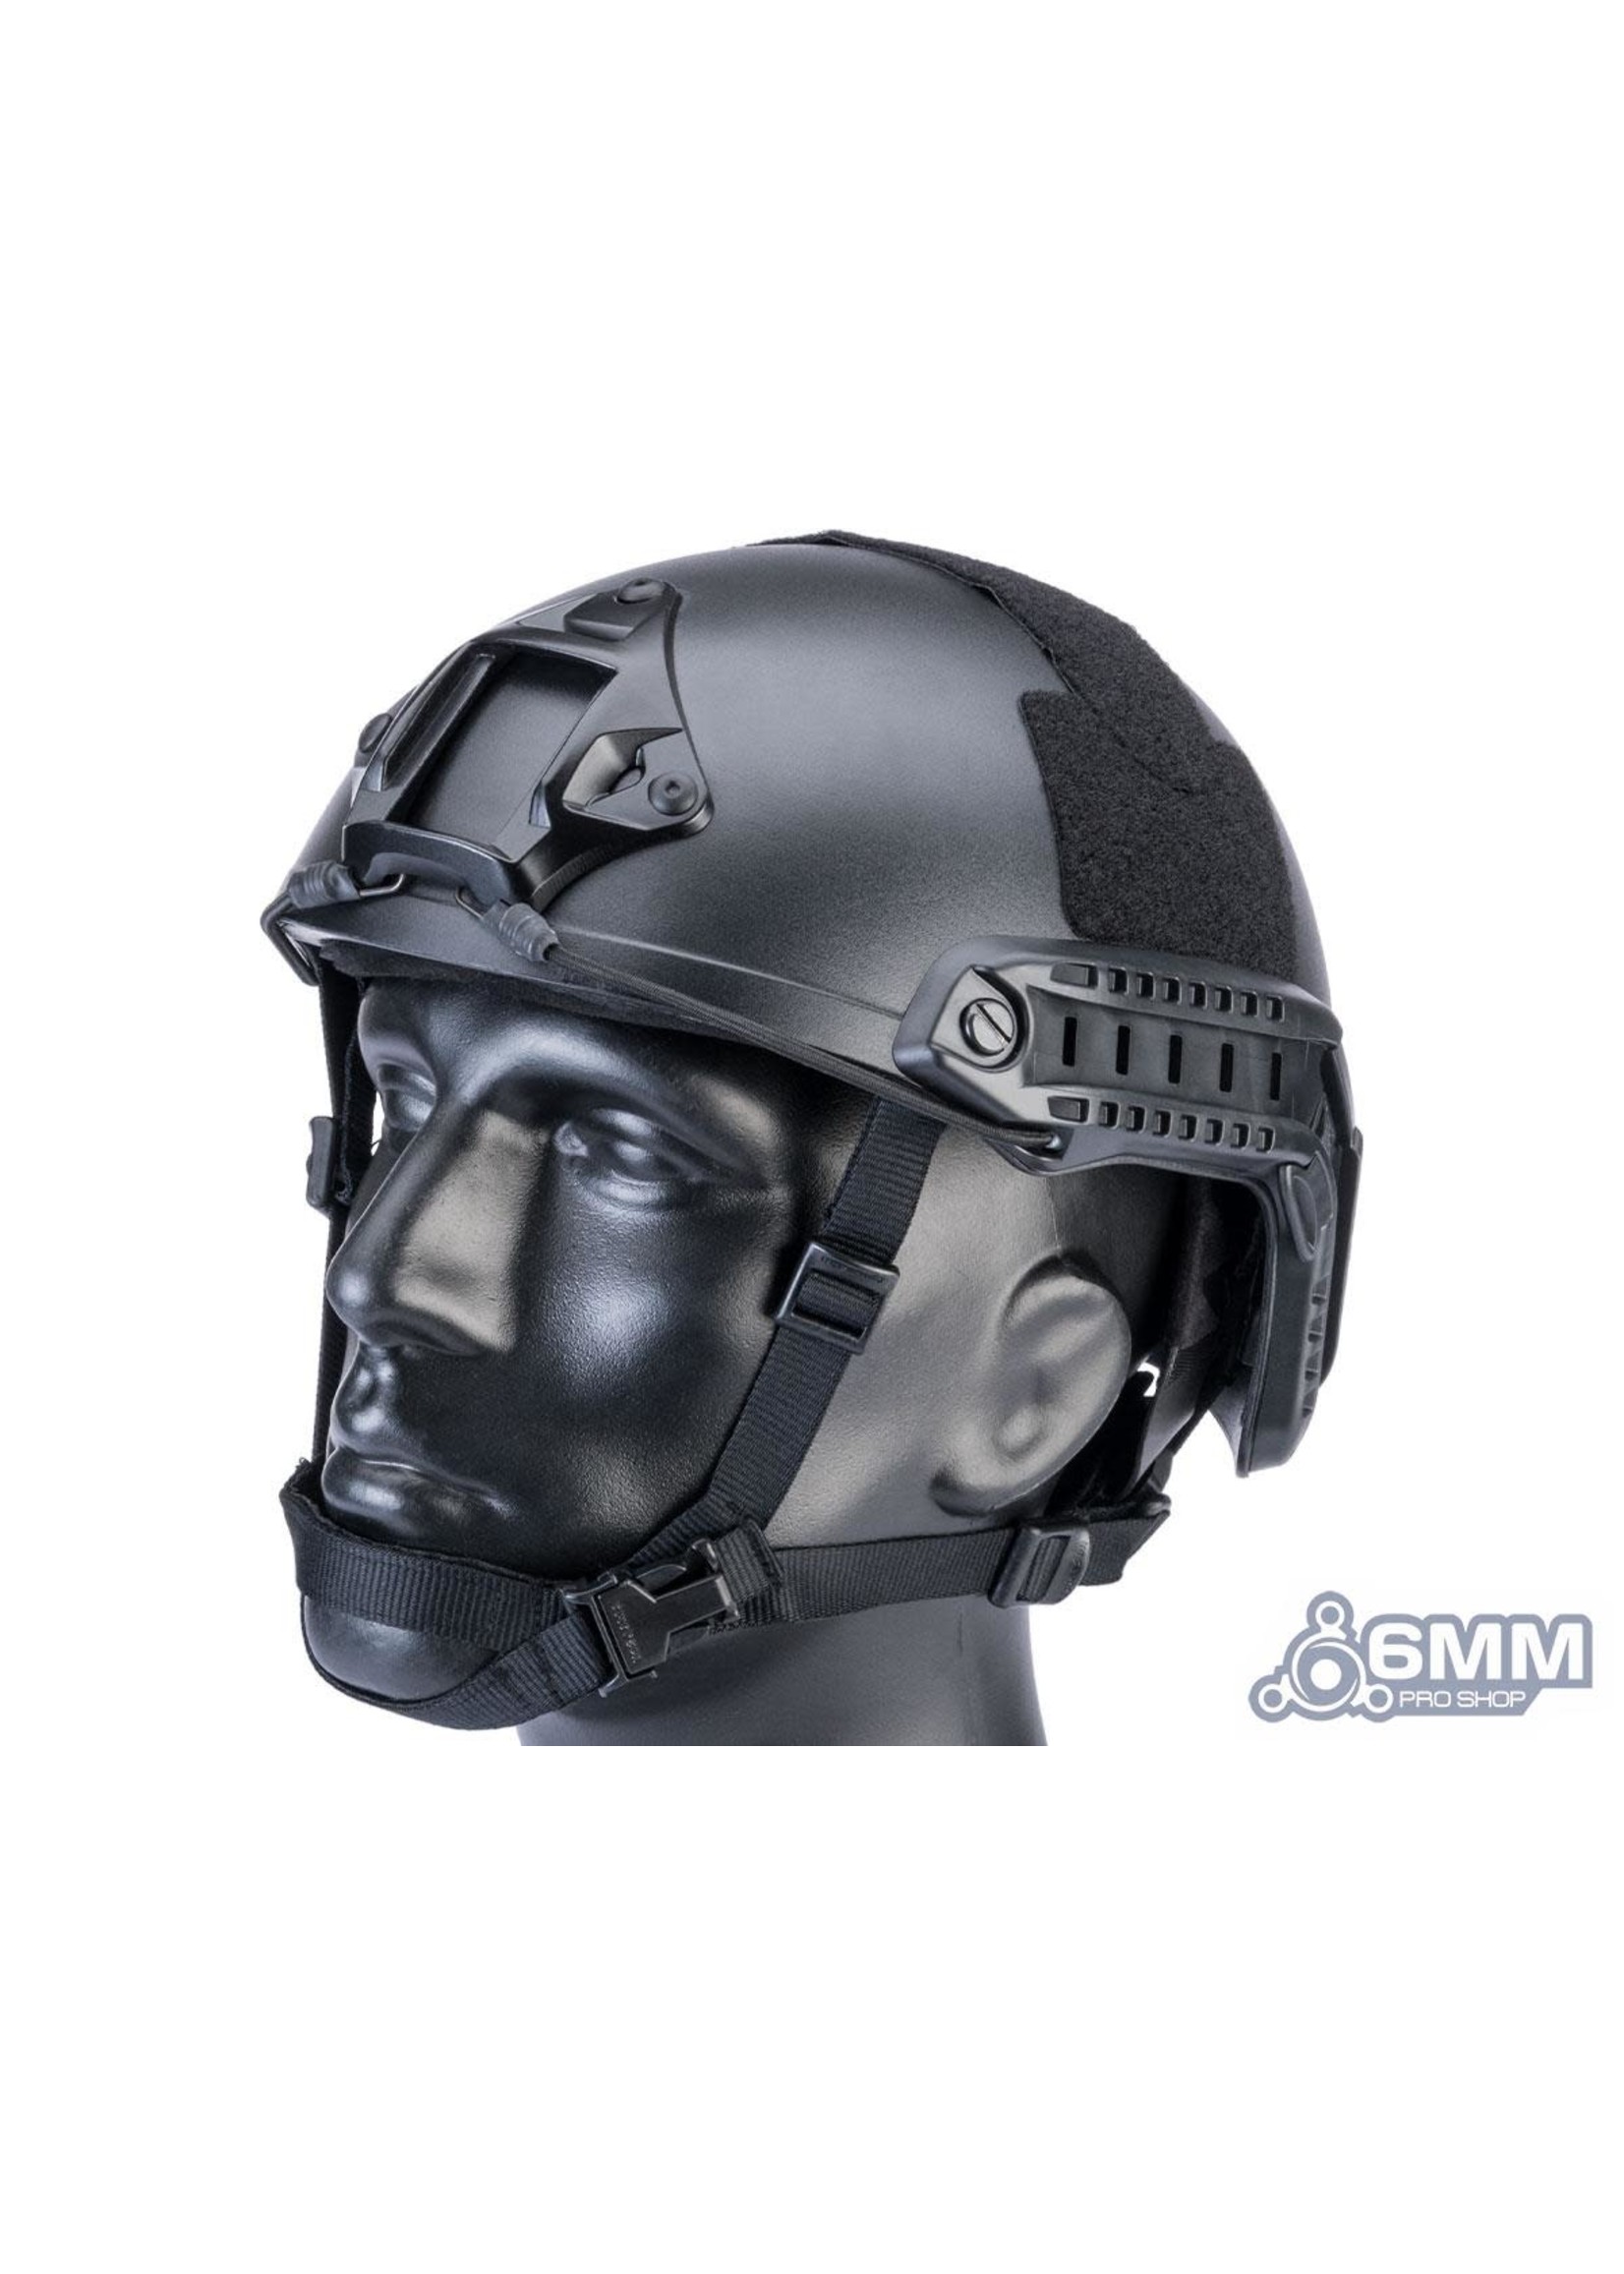 6mm 6mm ProShop Advanced High Cut Tac Helmet